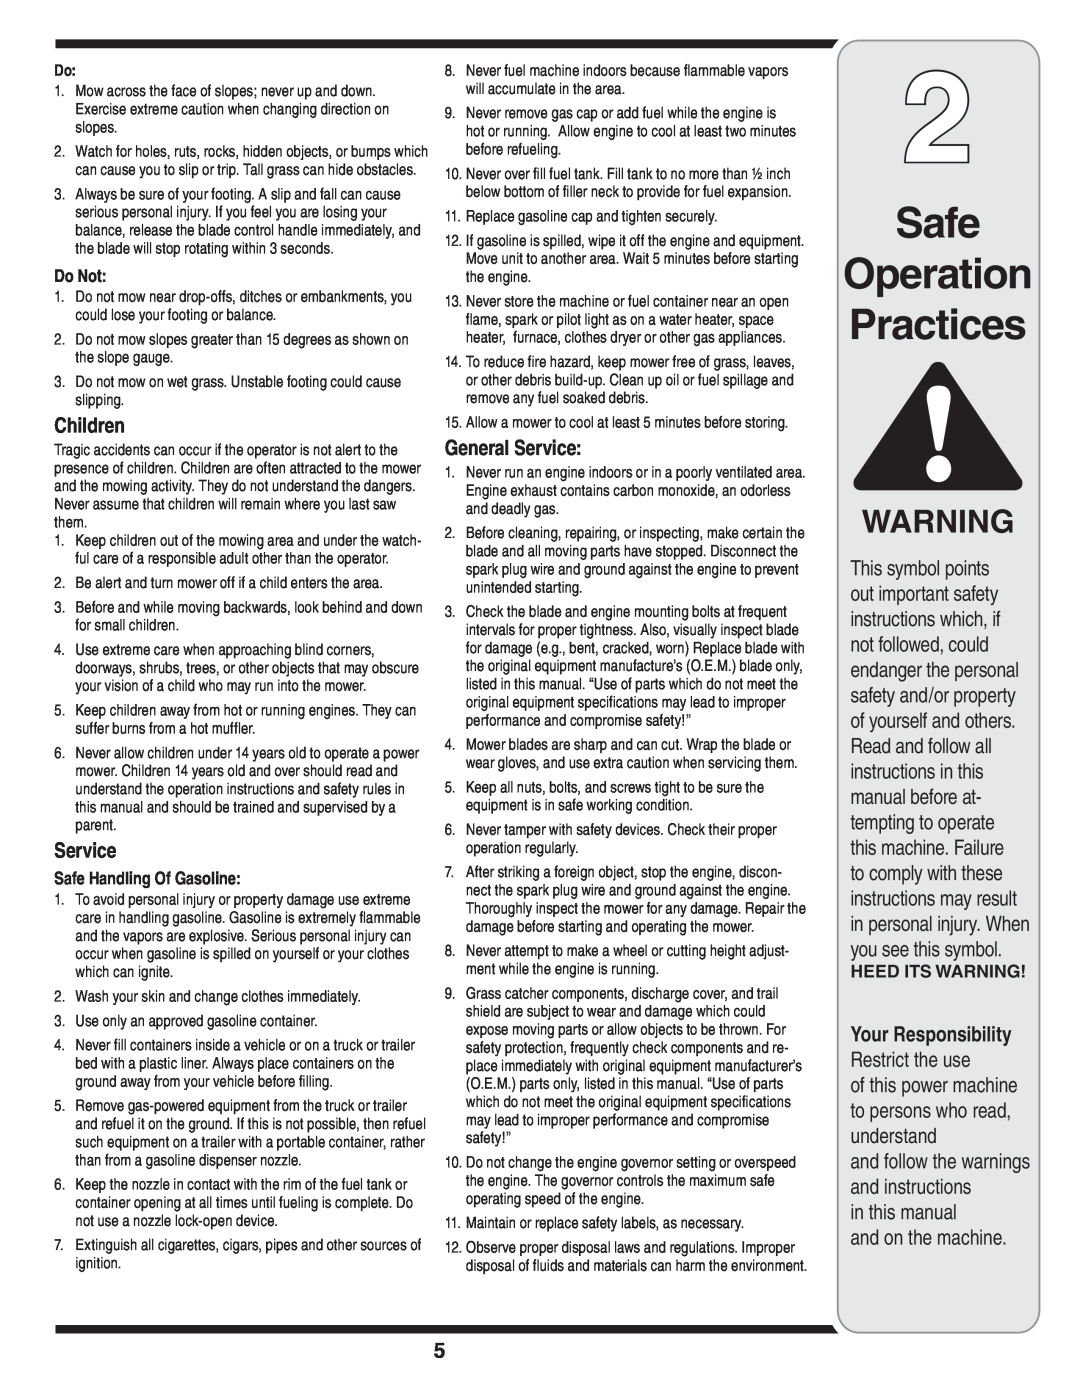 MTD Series 54M warranty Safe Operation Practices, Children, General Service, Do Not, Safe Handling Of Gasoline 